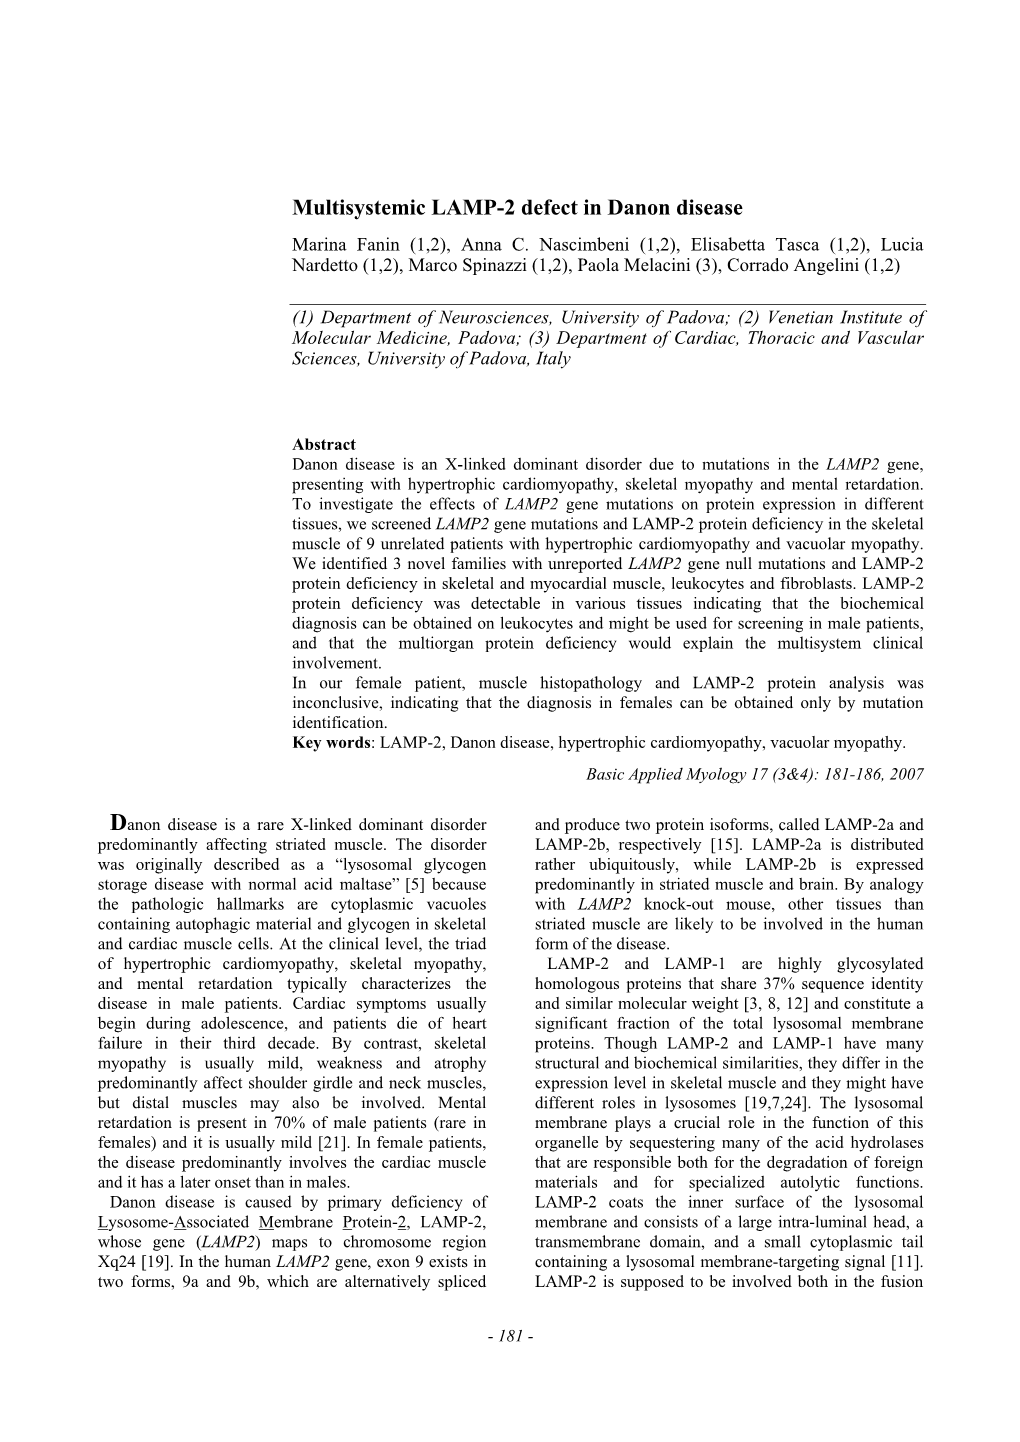 Multisystemic LAMP-2 Defect in Danon Disease Marina Fanin (1,2), Anna C